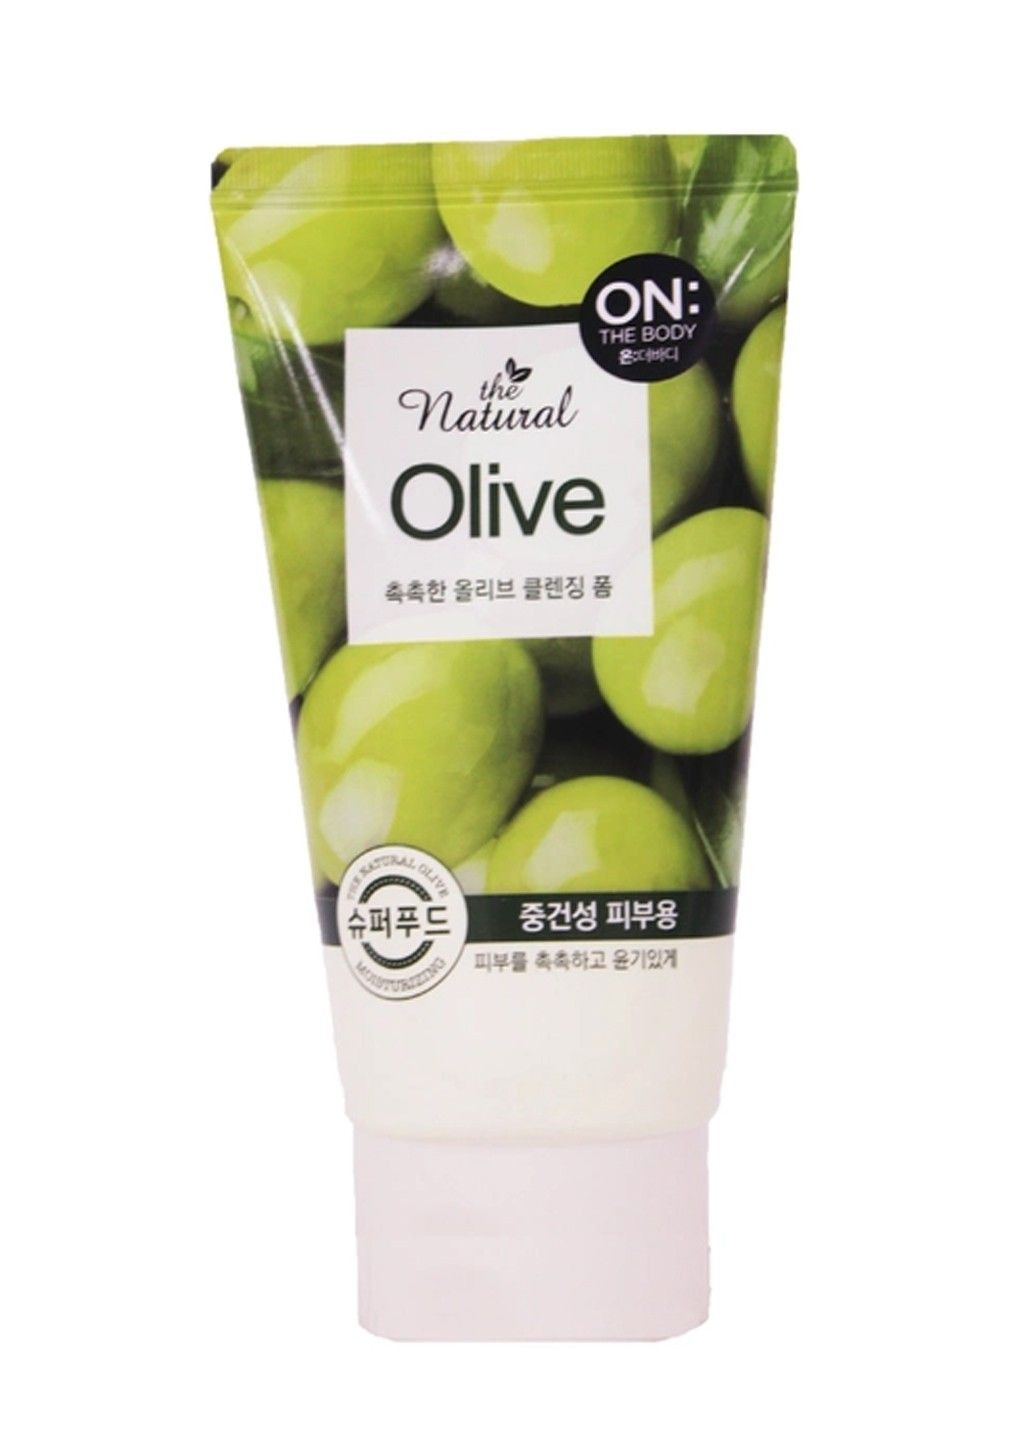 Очищаюча піна HH OTB The Natural Olivе з олією оливи, 120 мл LG (278048708)